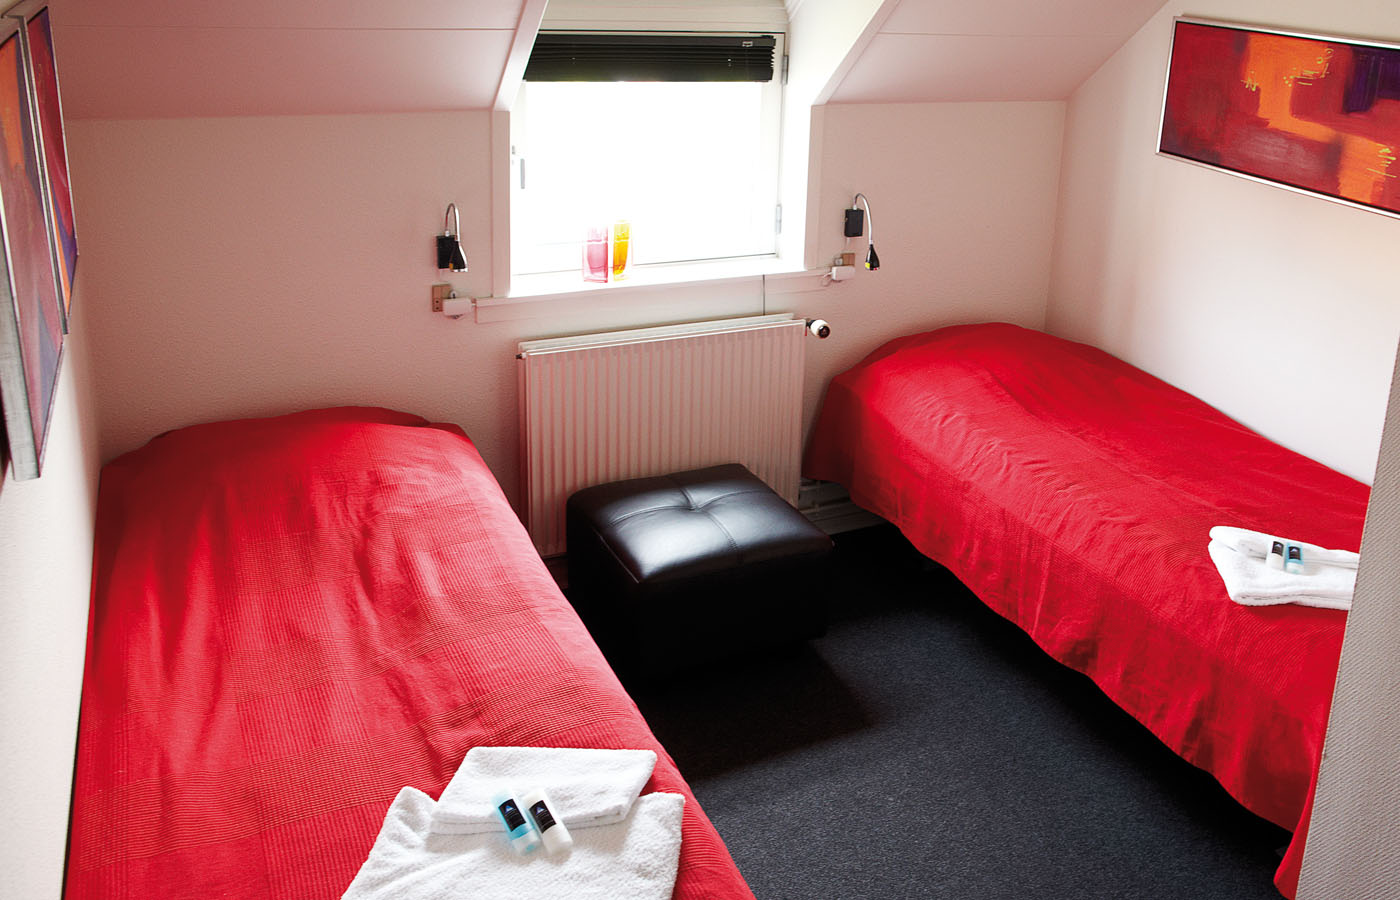 værelse med senge og sengelamper som kan benyttes når du overnatter hos Danhostel Svendborg